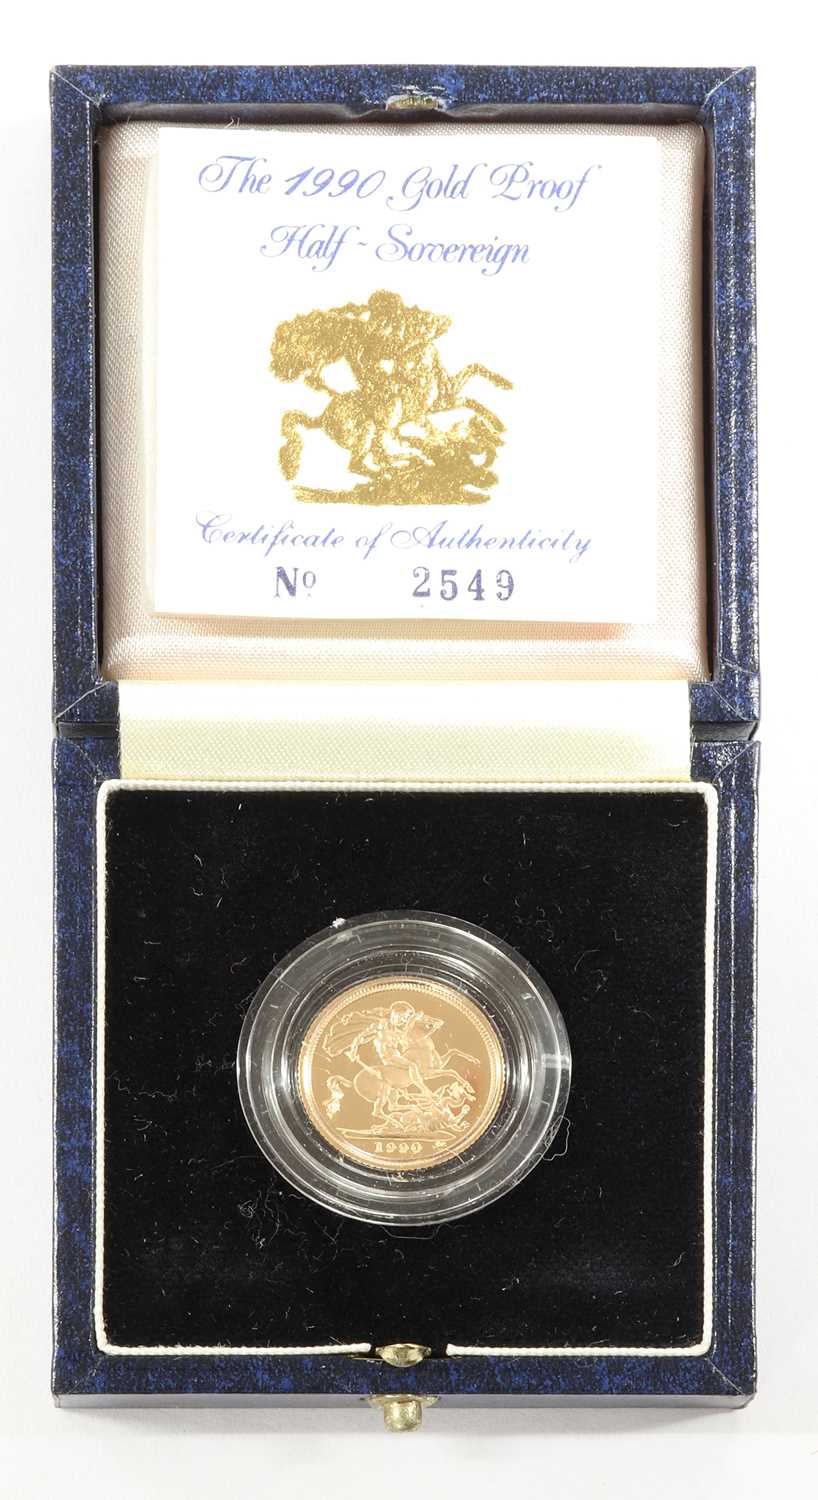 Lot 48 - Coins, Great Britain, Elizabeth II (1952-)